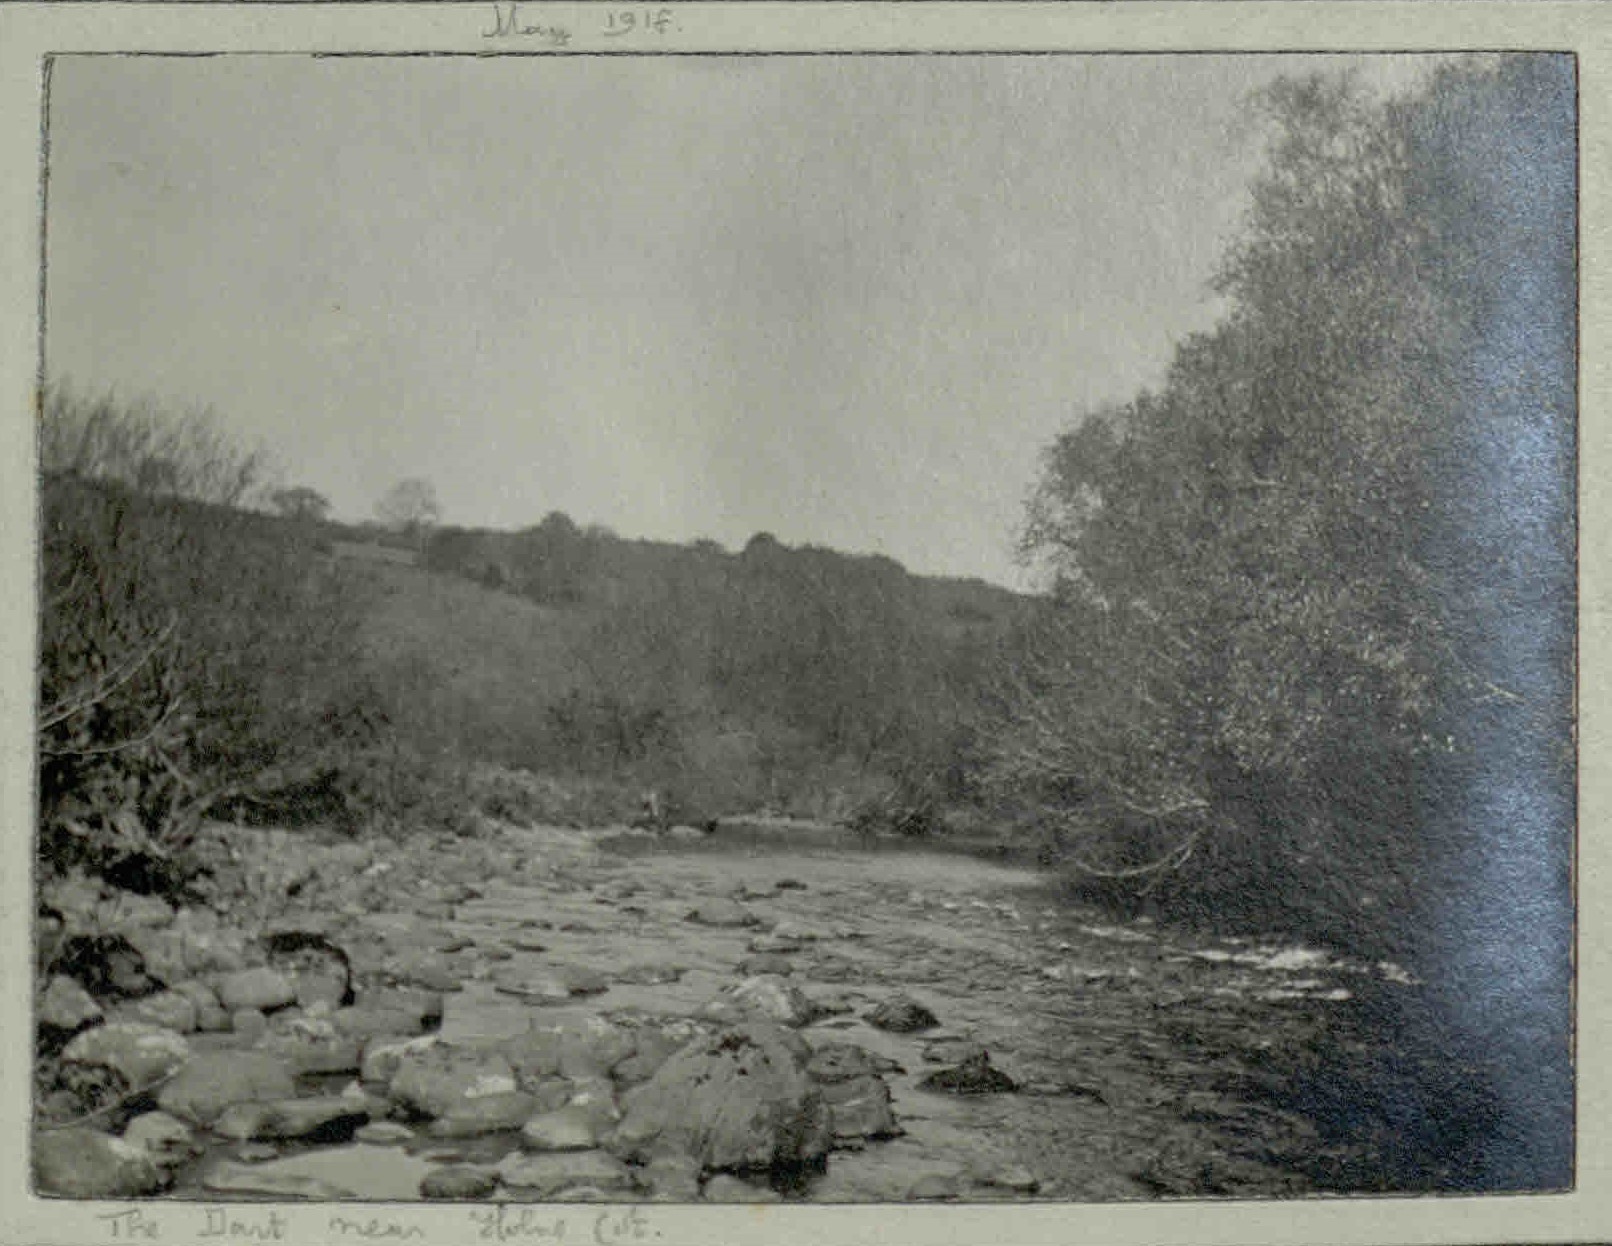 The river Dart, 1918